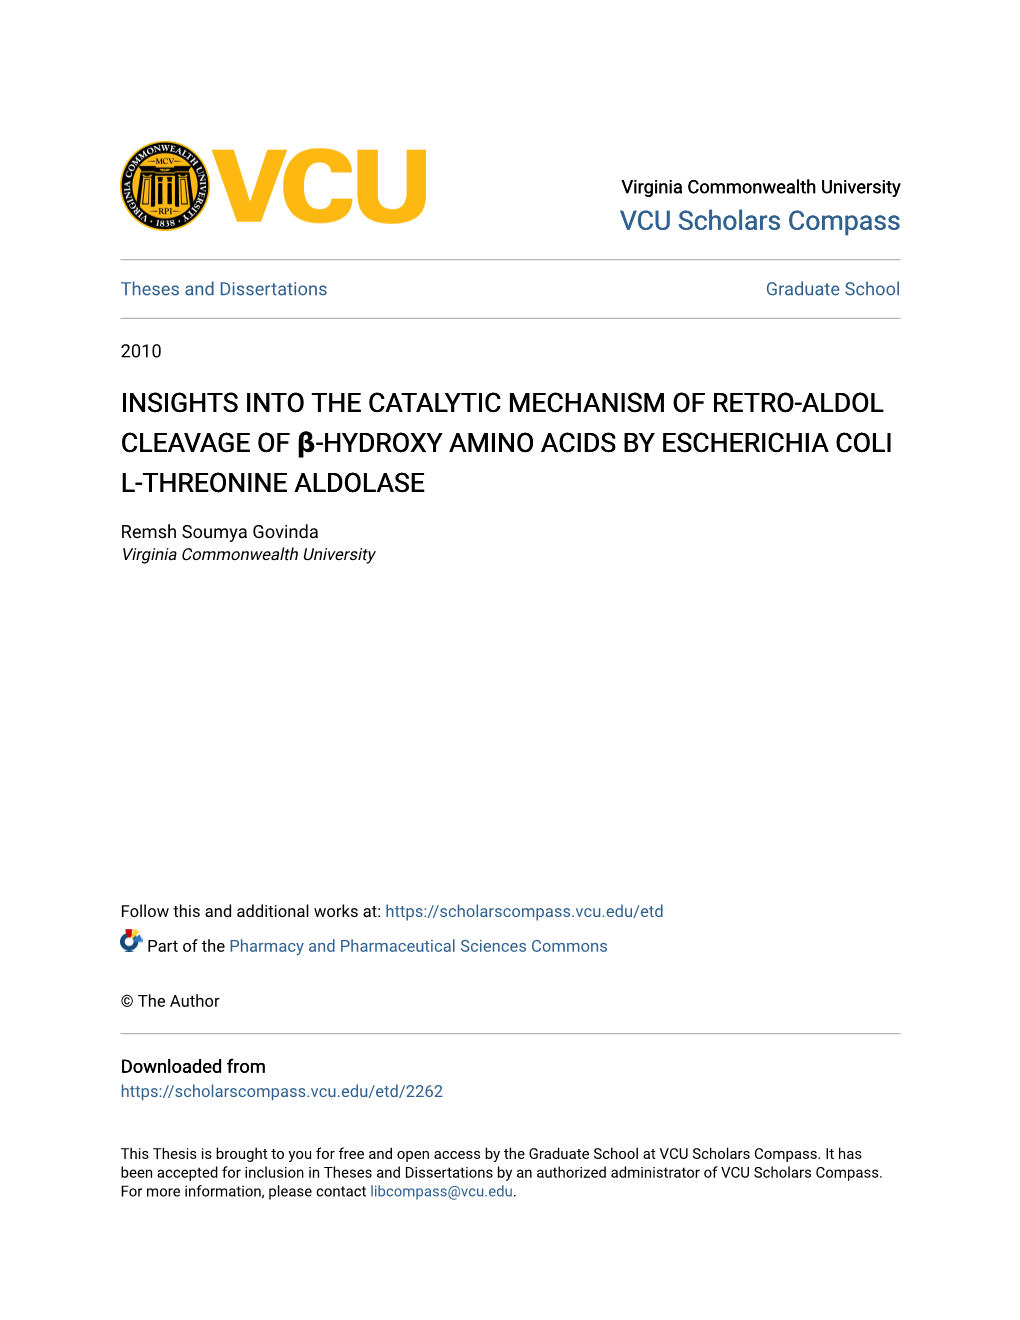 Insights Into the Catalytic Mechanism of Retro-Aldol Cleavage of Β-Hydroxy Amino Acids by Escherichia Coli L-Threonine Aldolase